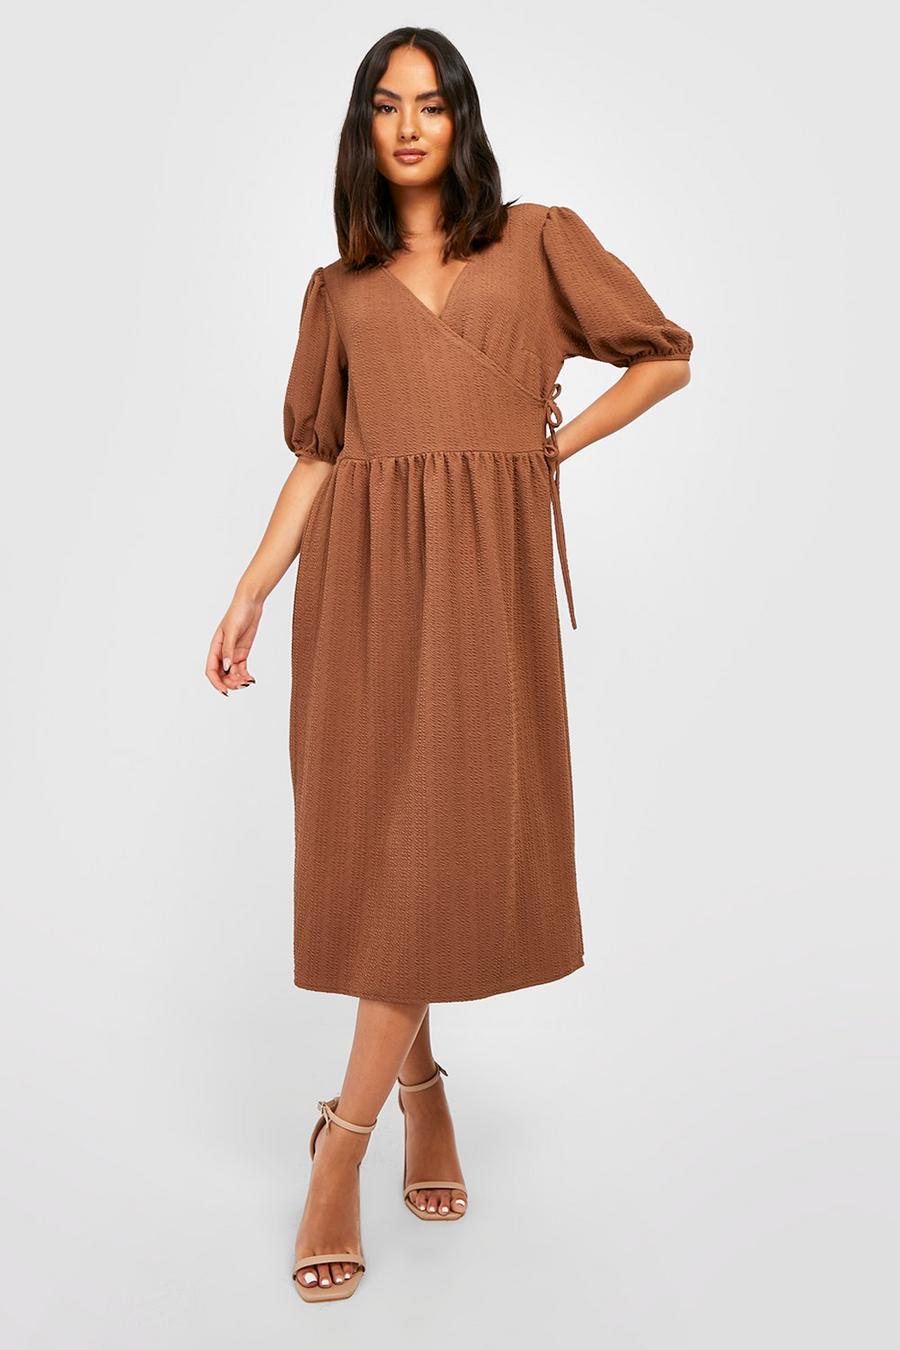 Chocolate brown Textured Puff Sleeve Wrap Dress